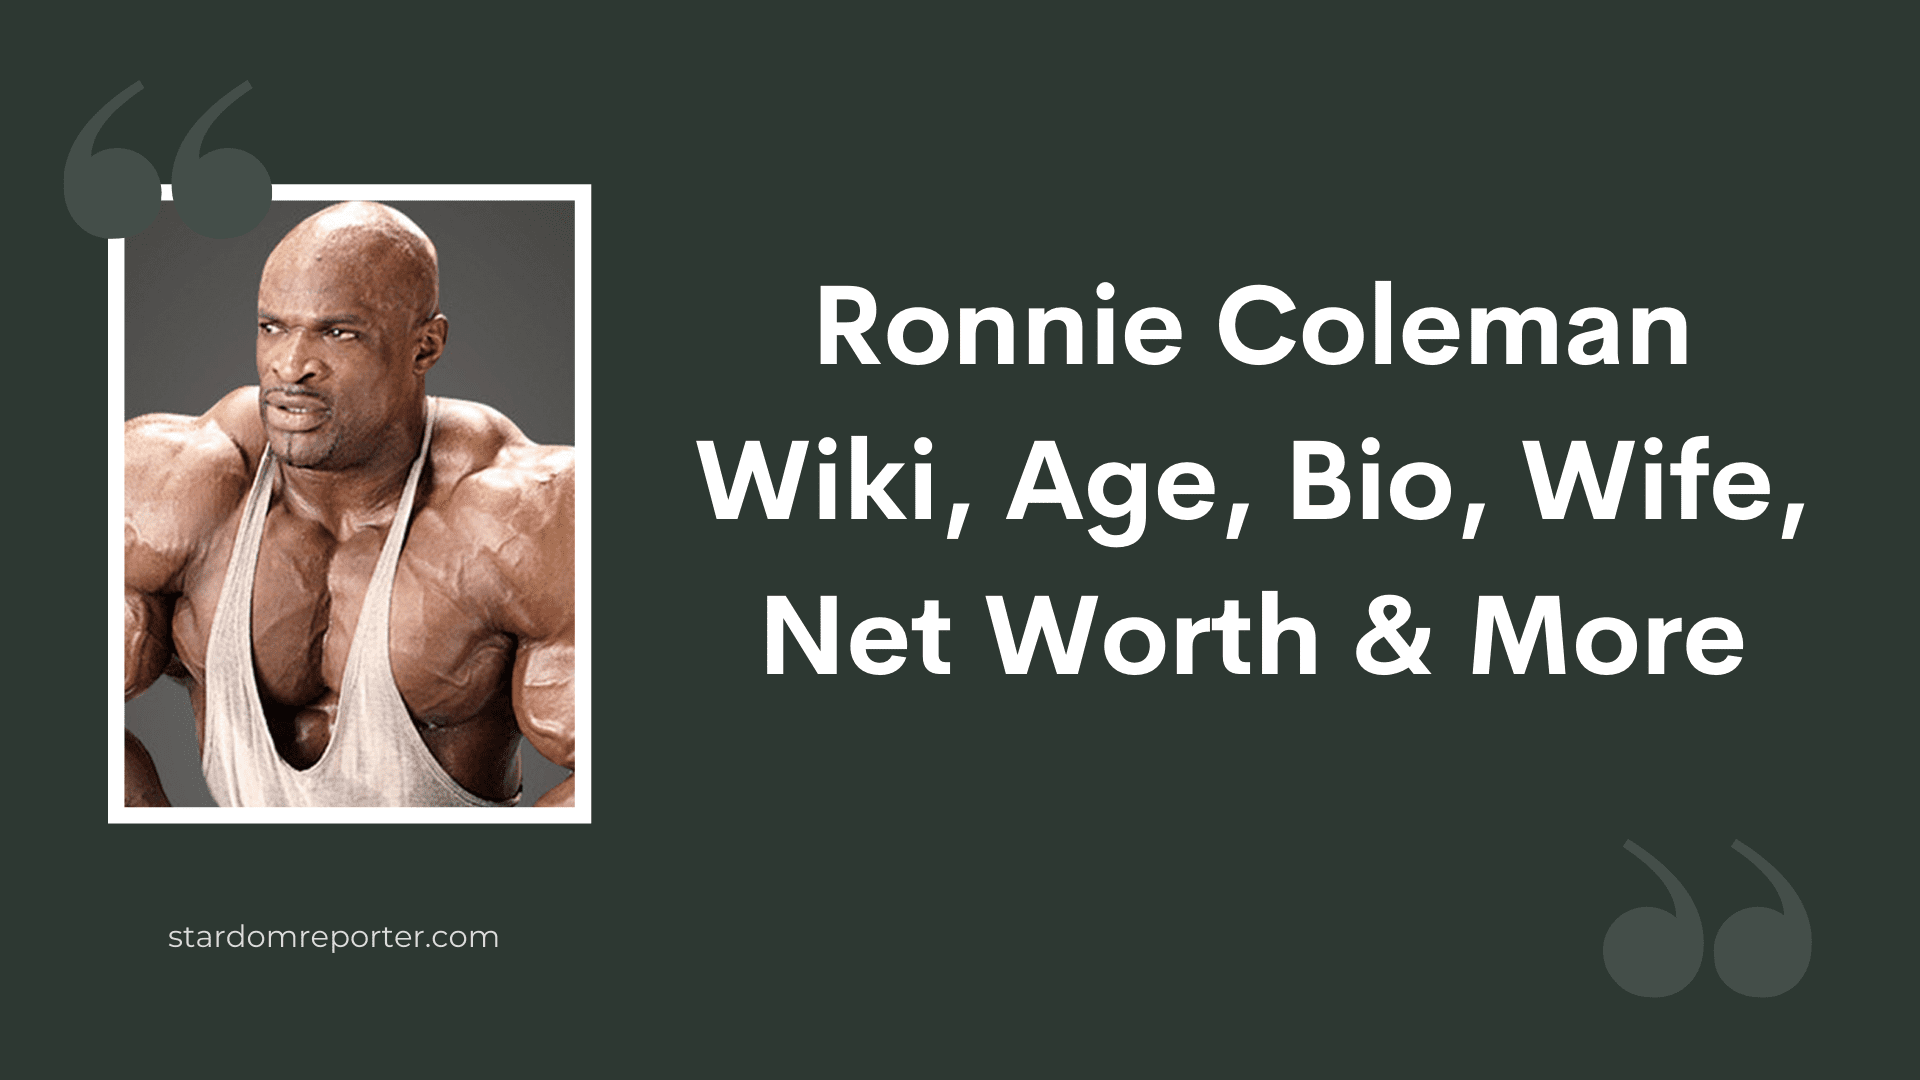 Ronnie Coleman Wiki, Age, Bio, Wife, Net Worth & More - 45